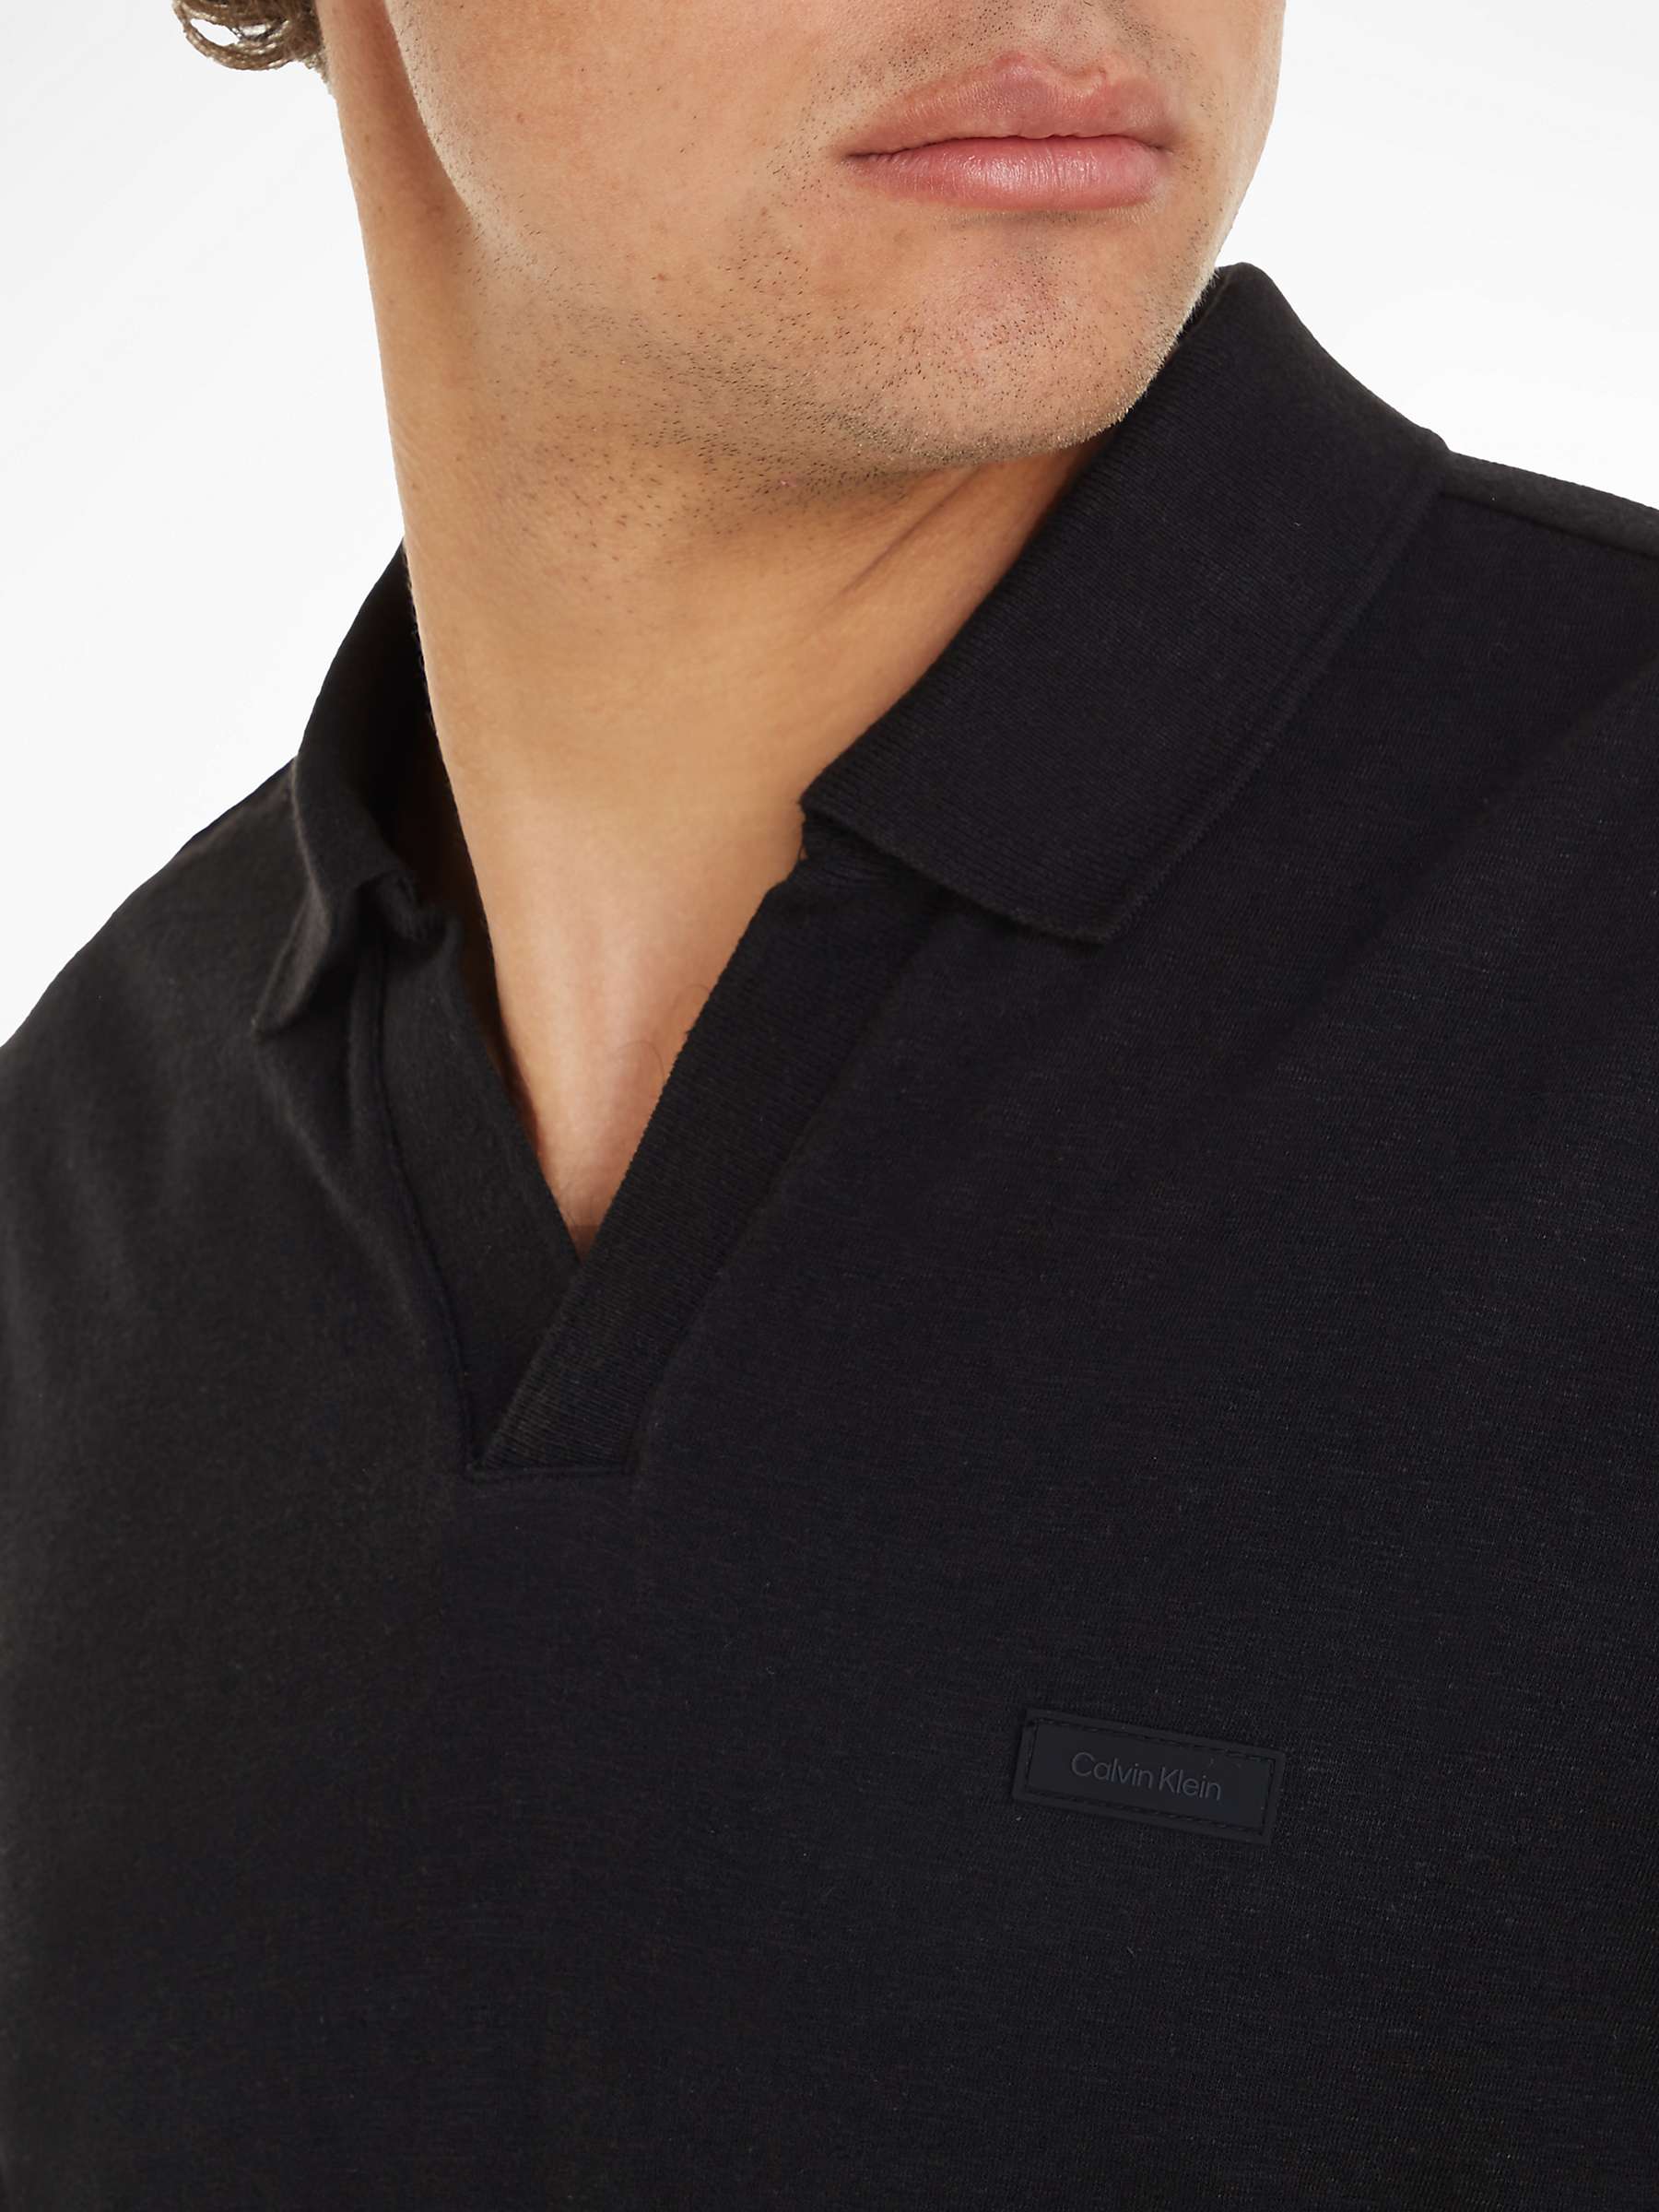 Buy Calvin Klein Organic Cotton Short Sleeve Polo Shirt Online at johnlewis.com